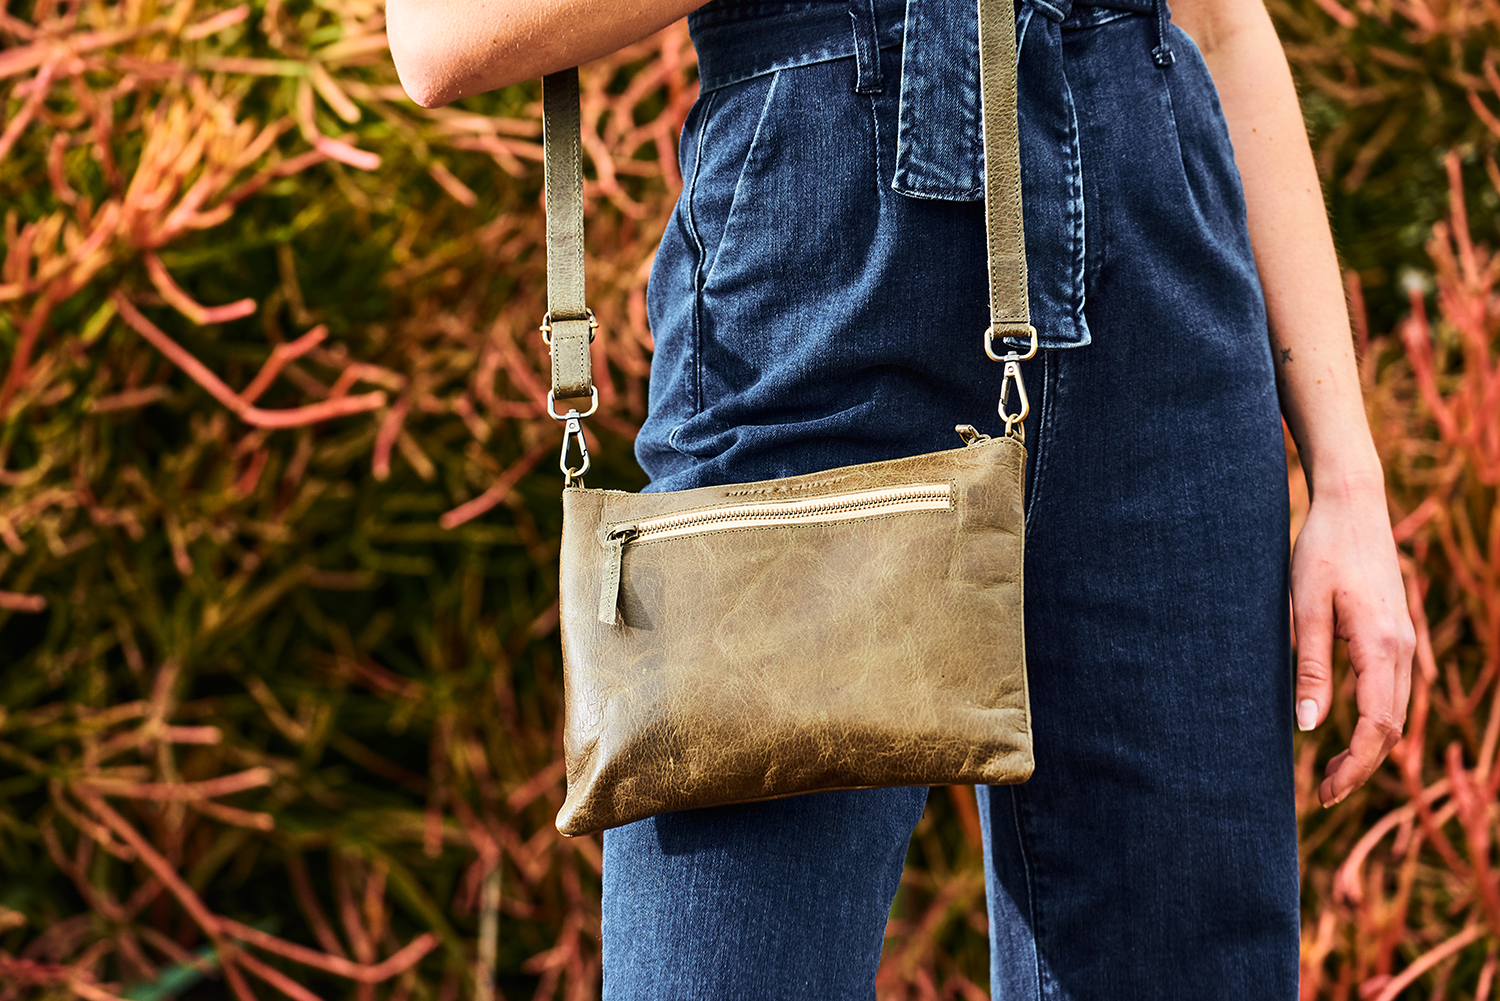 Ethically handmade leather purses